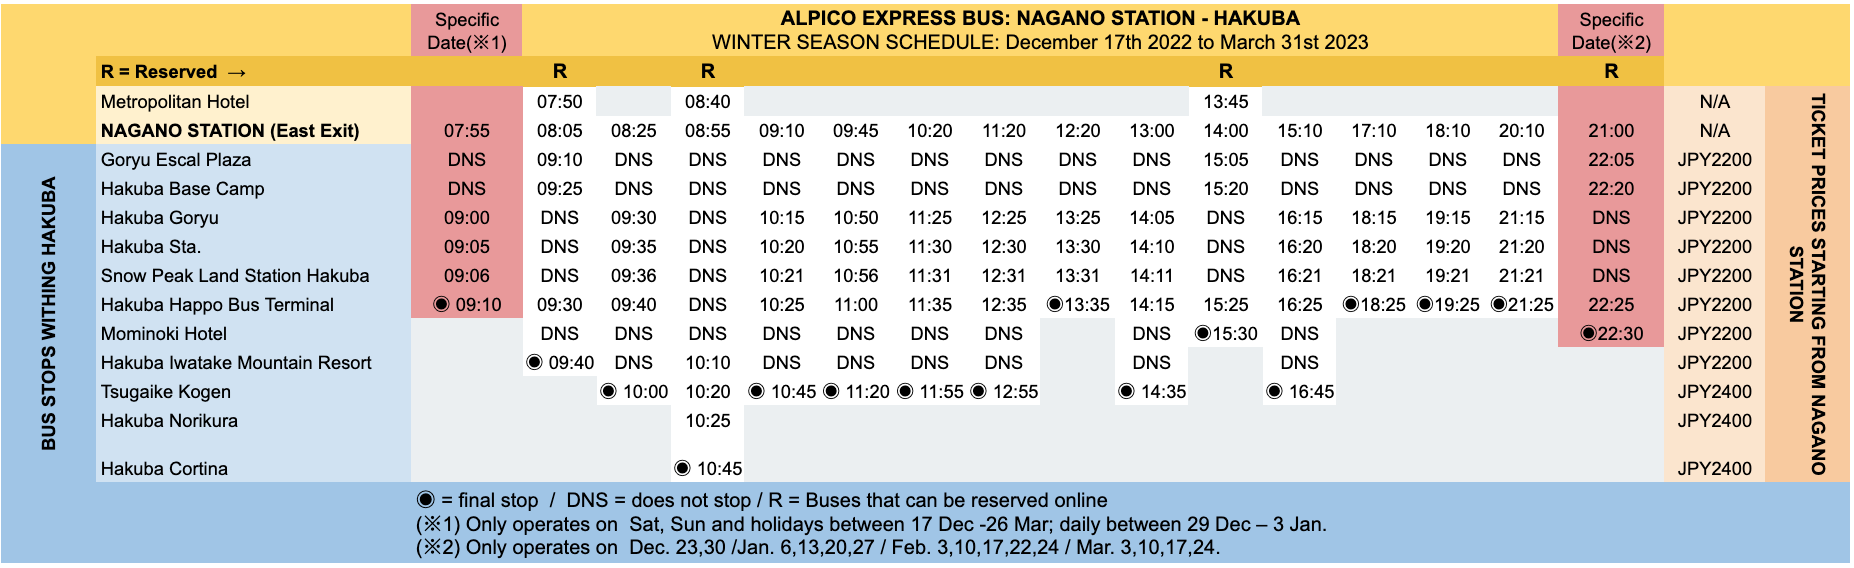 alpico-winter-express-bus-timetable-from-nagano-to-hakuba